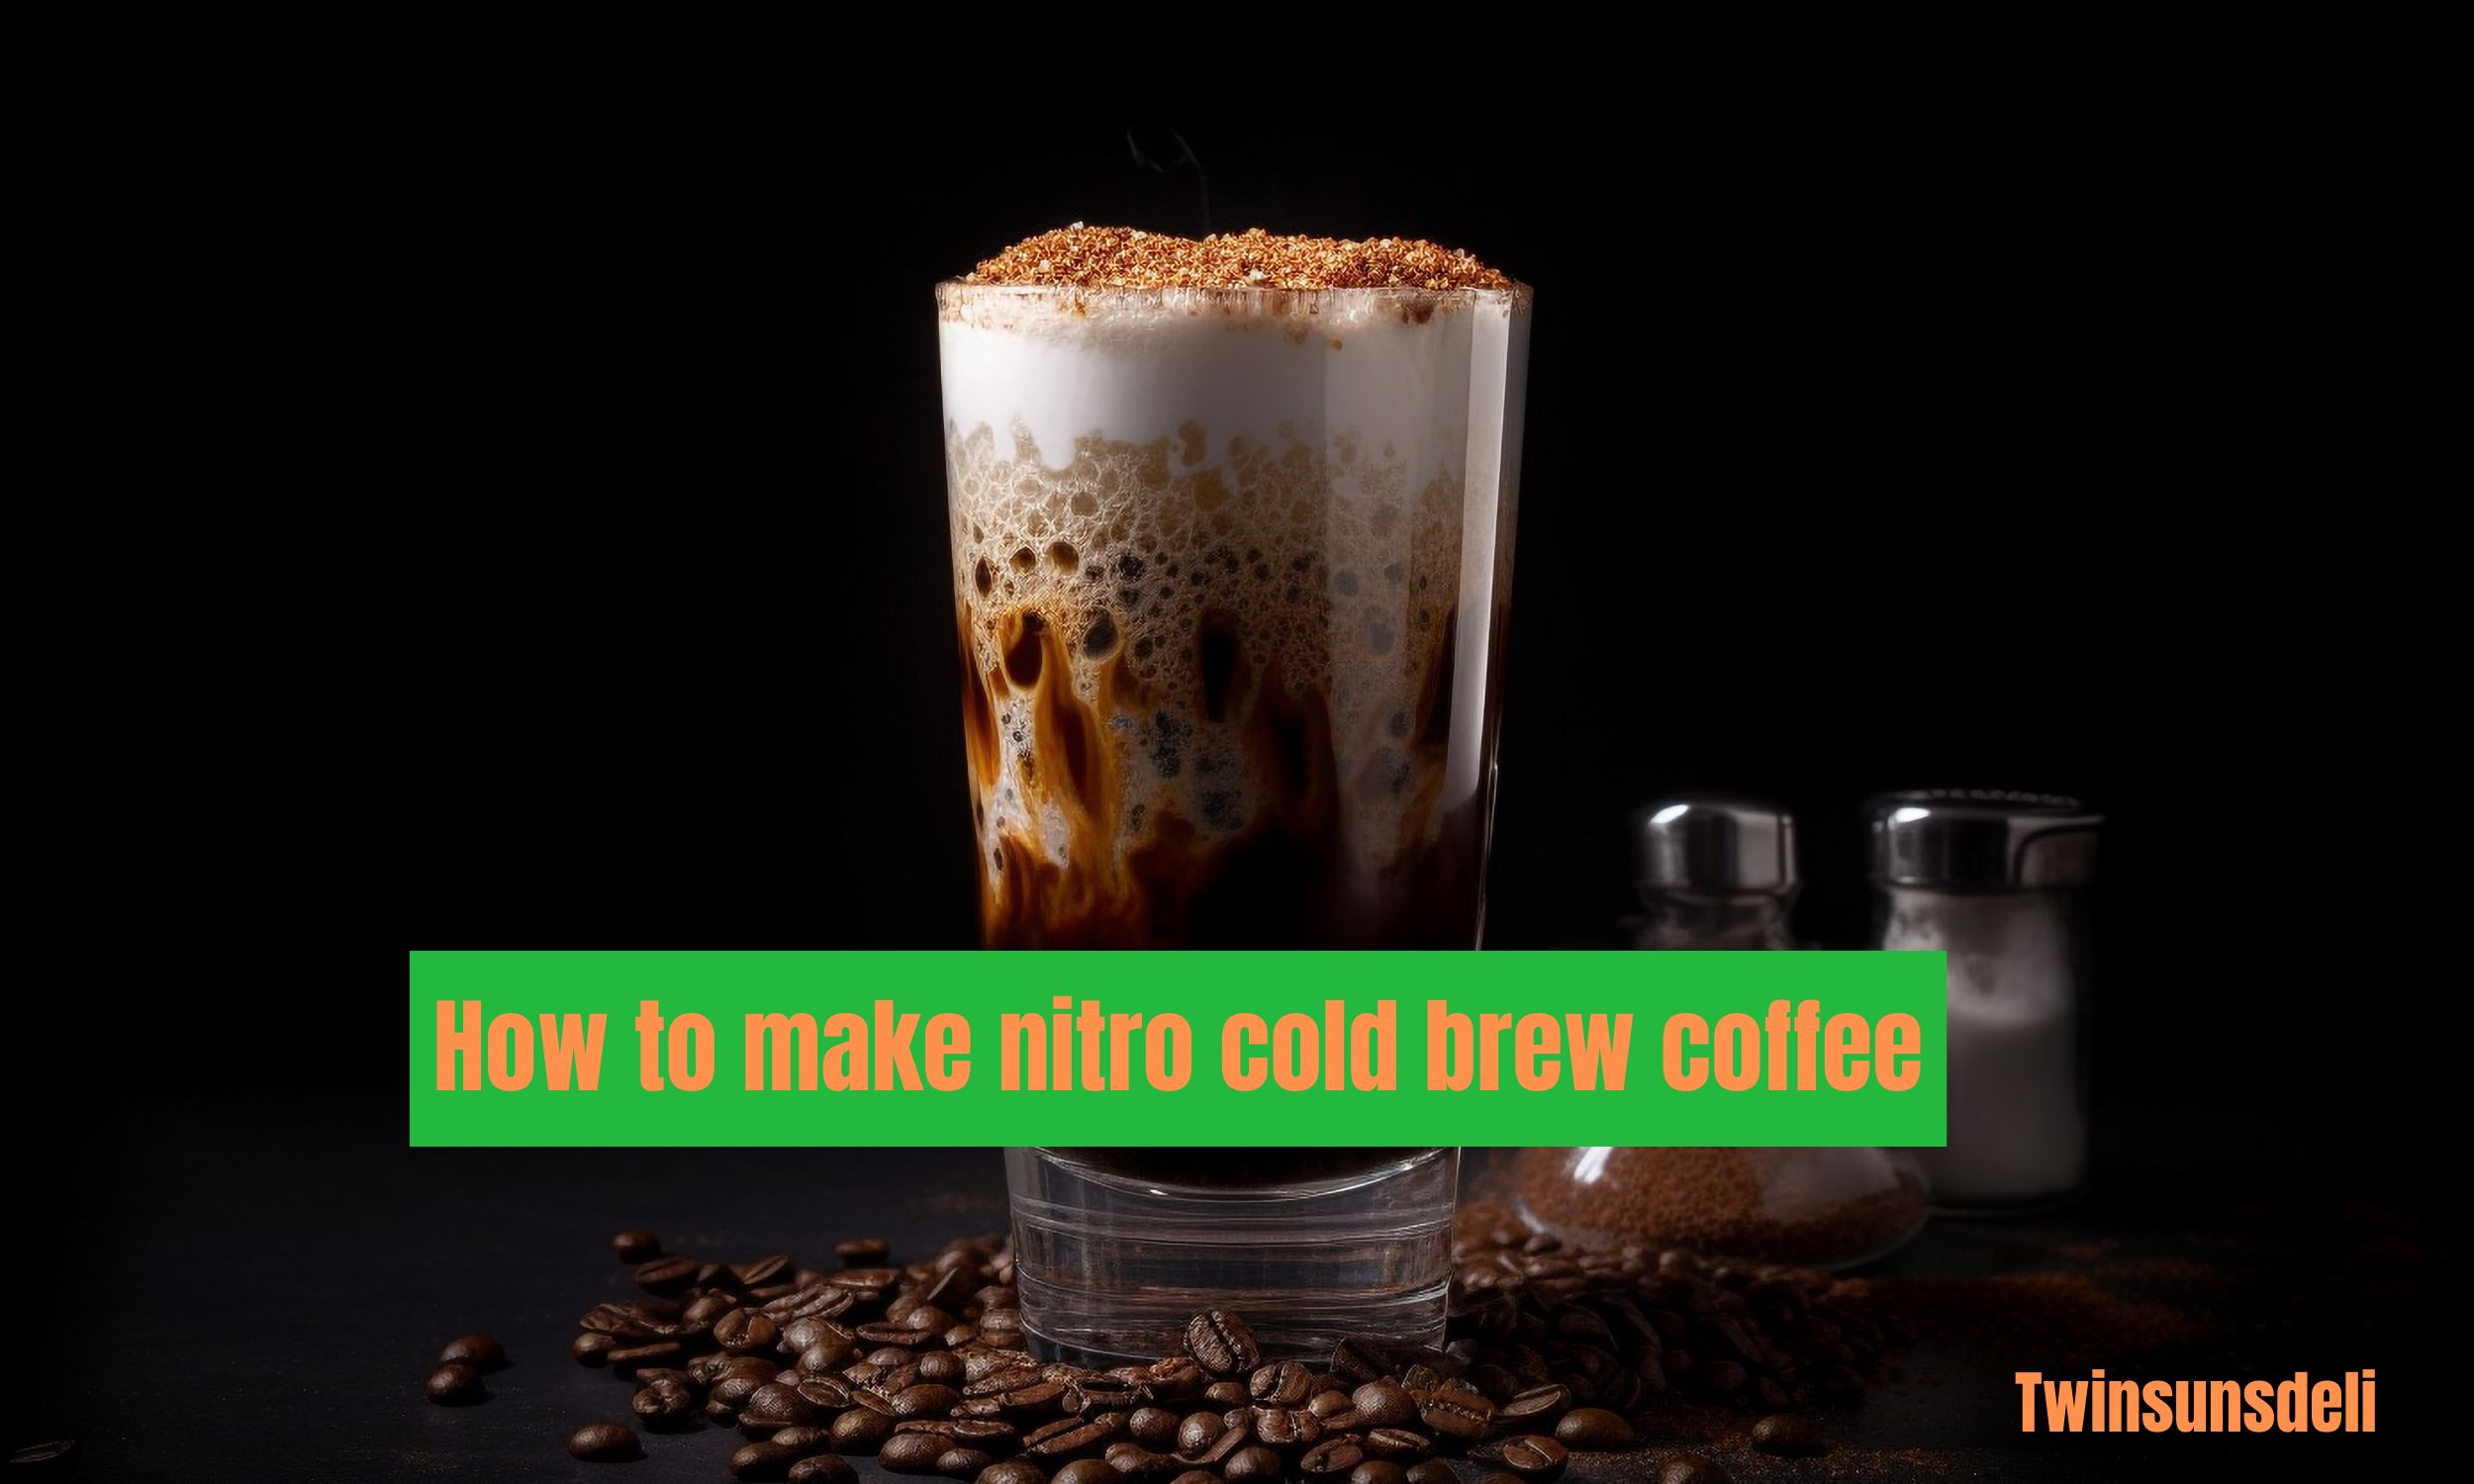 How to make nitro cold brew coffee